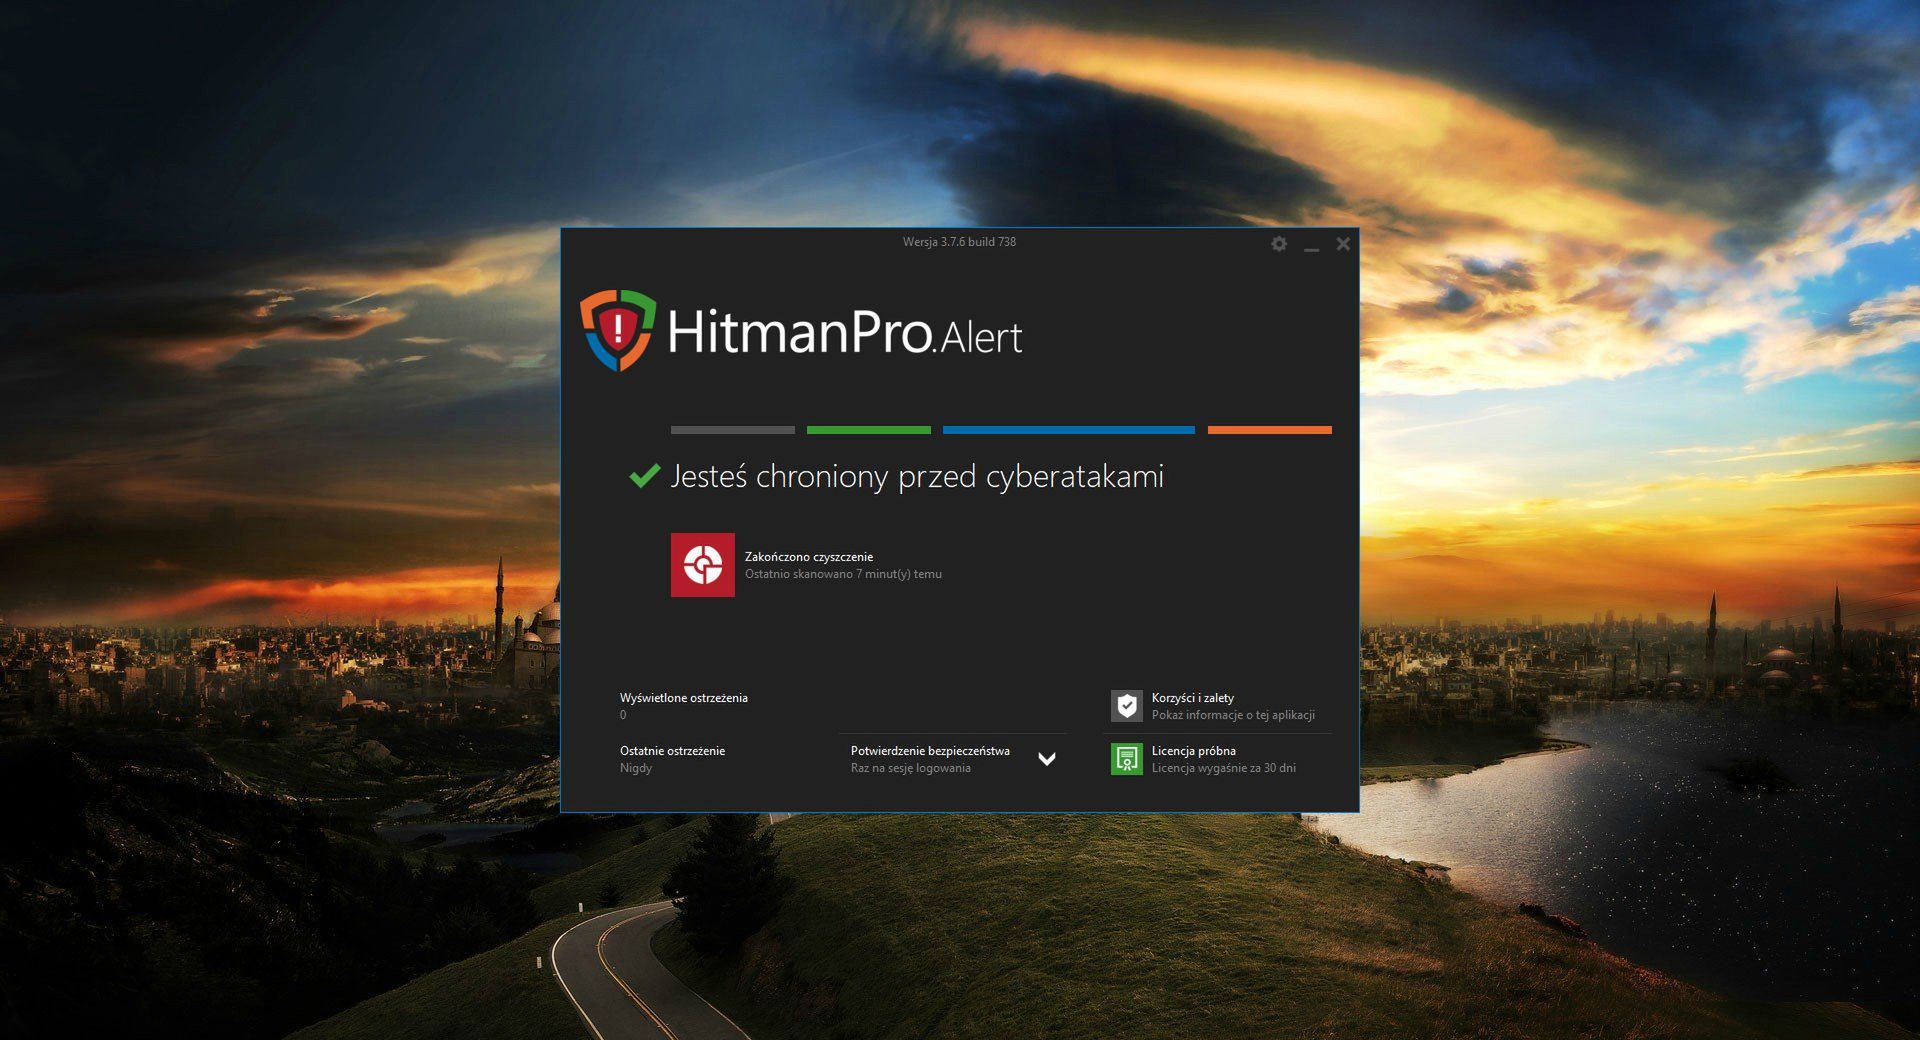 instaling HitmanPro.Alert 3.8.25.977